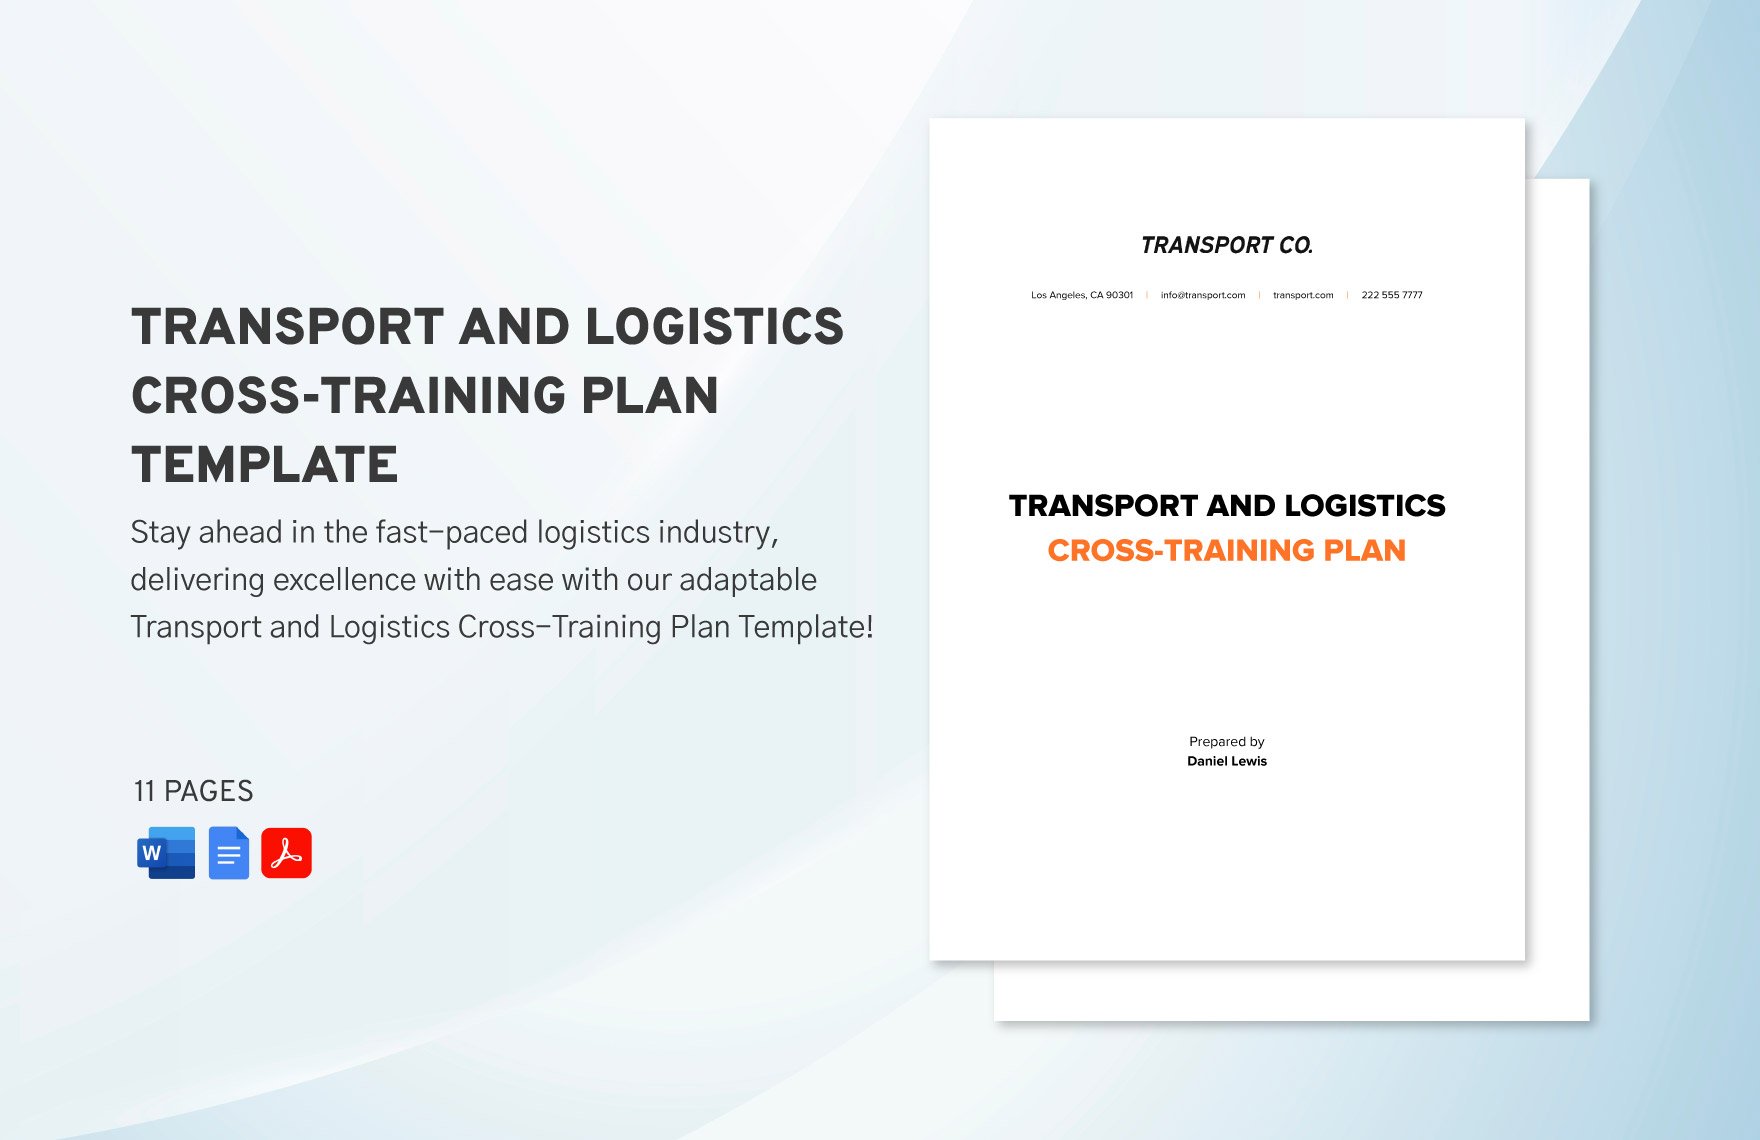 Transport and Logistics Cross-Training Plan Template